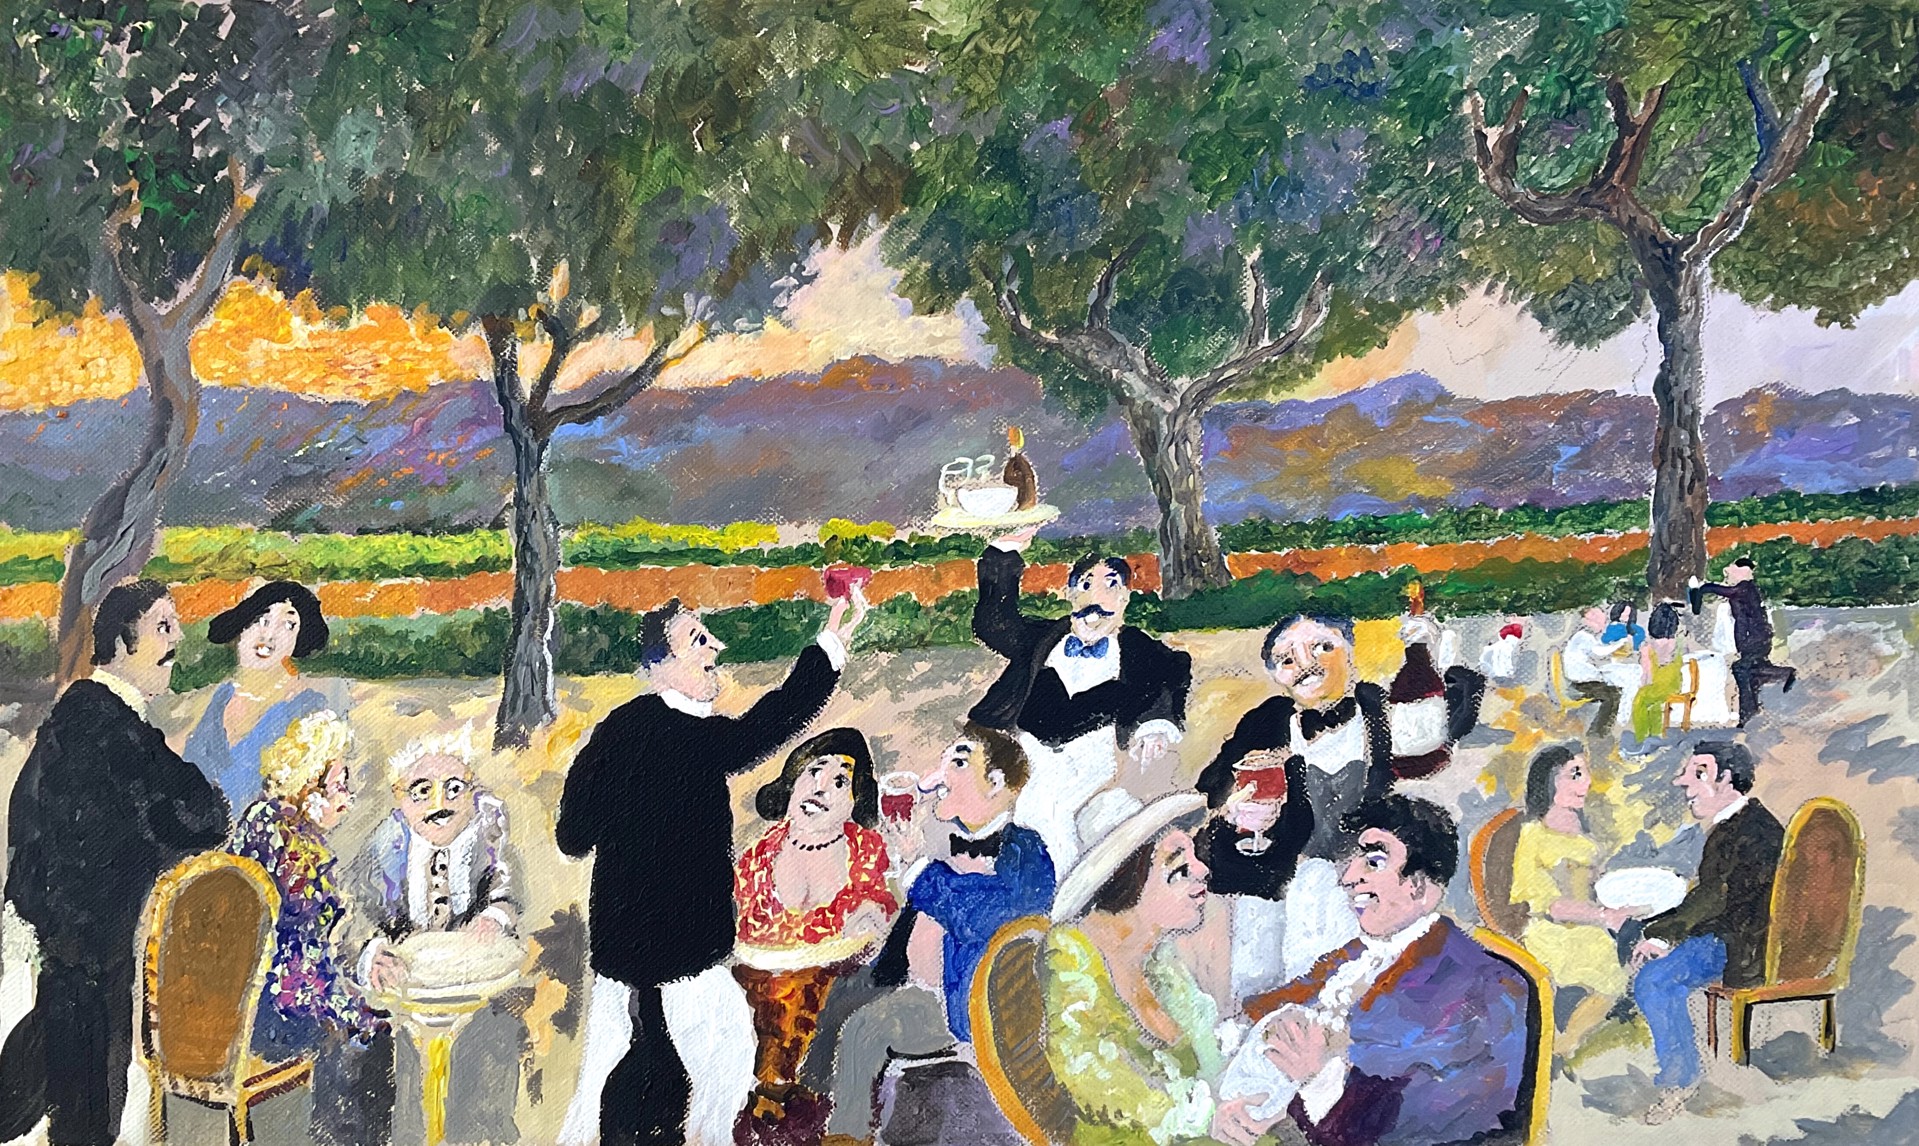 Dinner In The Vineyard by Guy Buffet